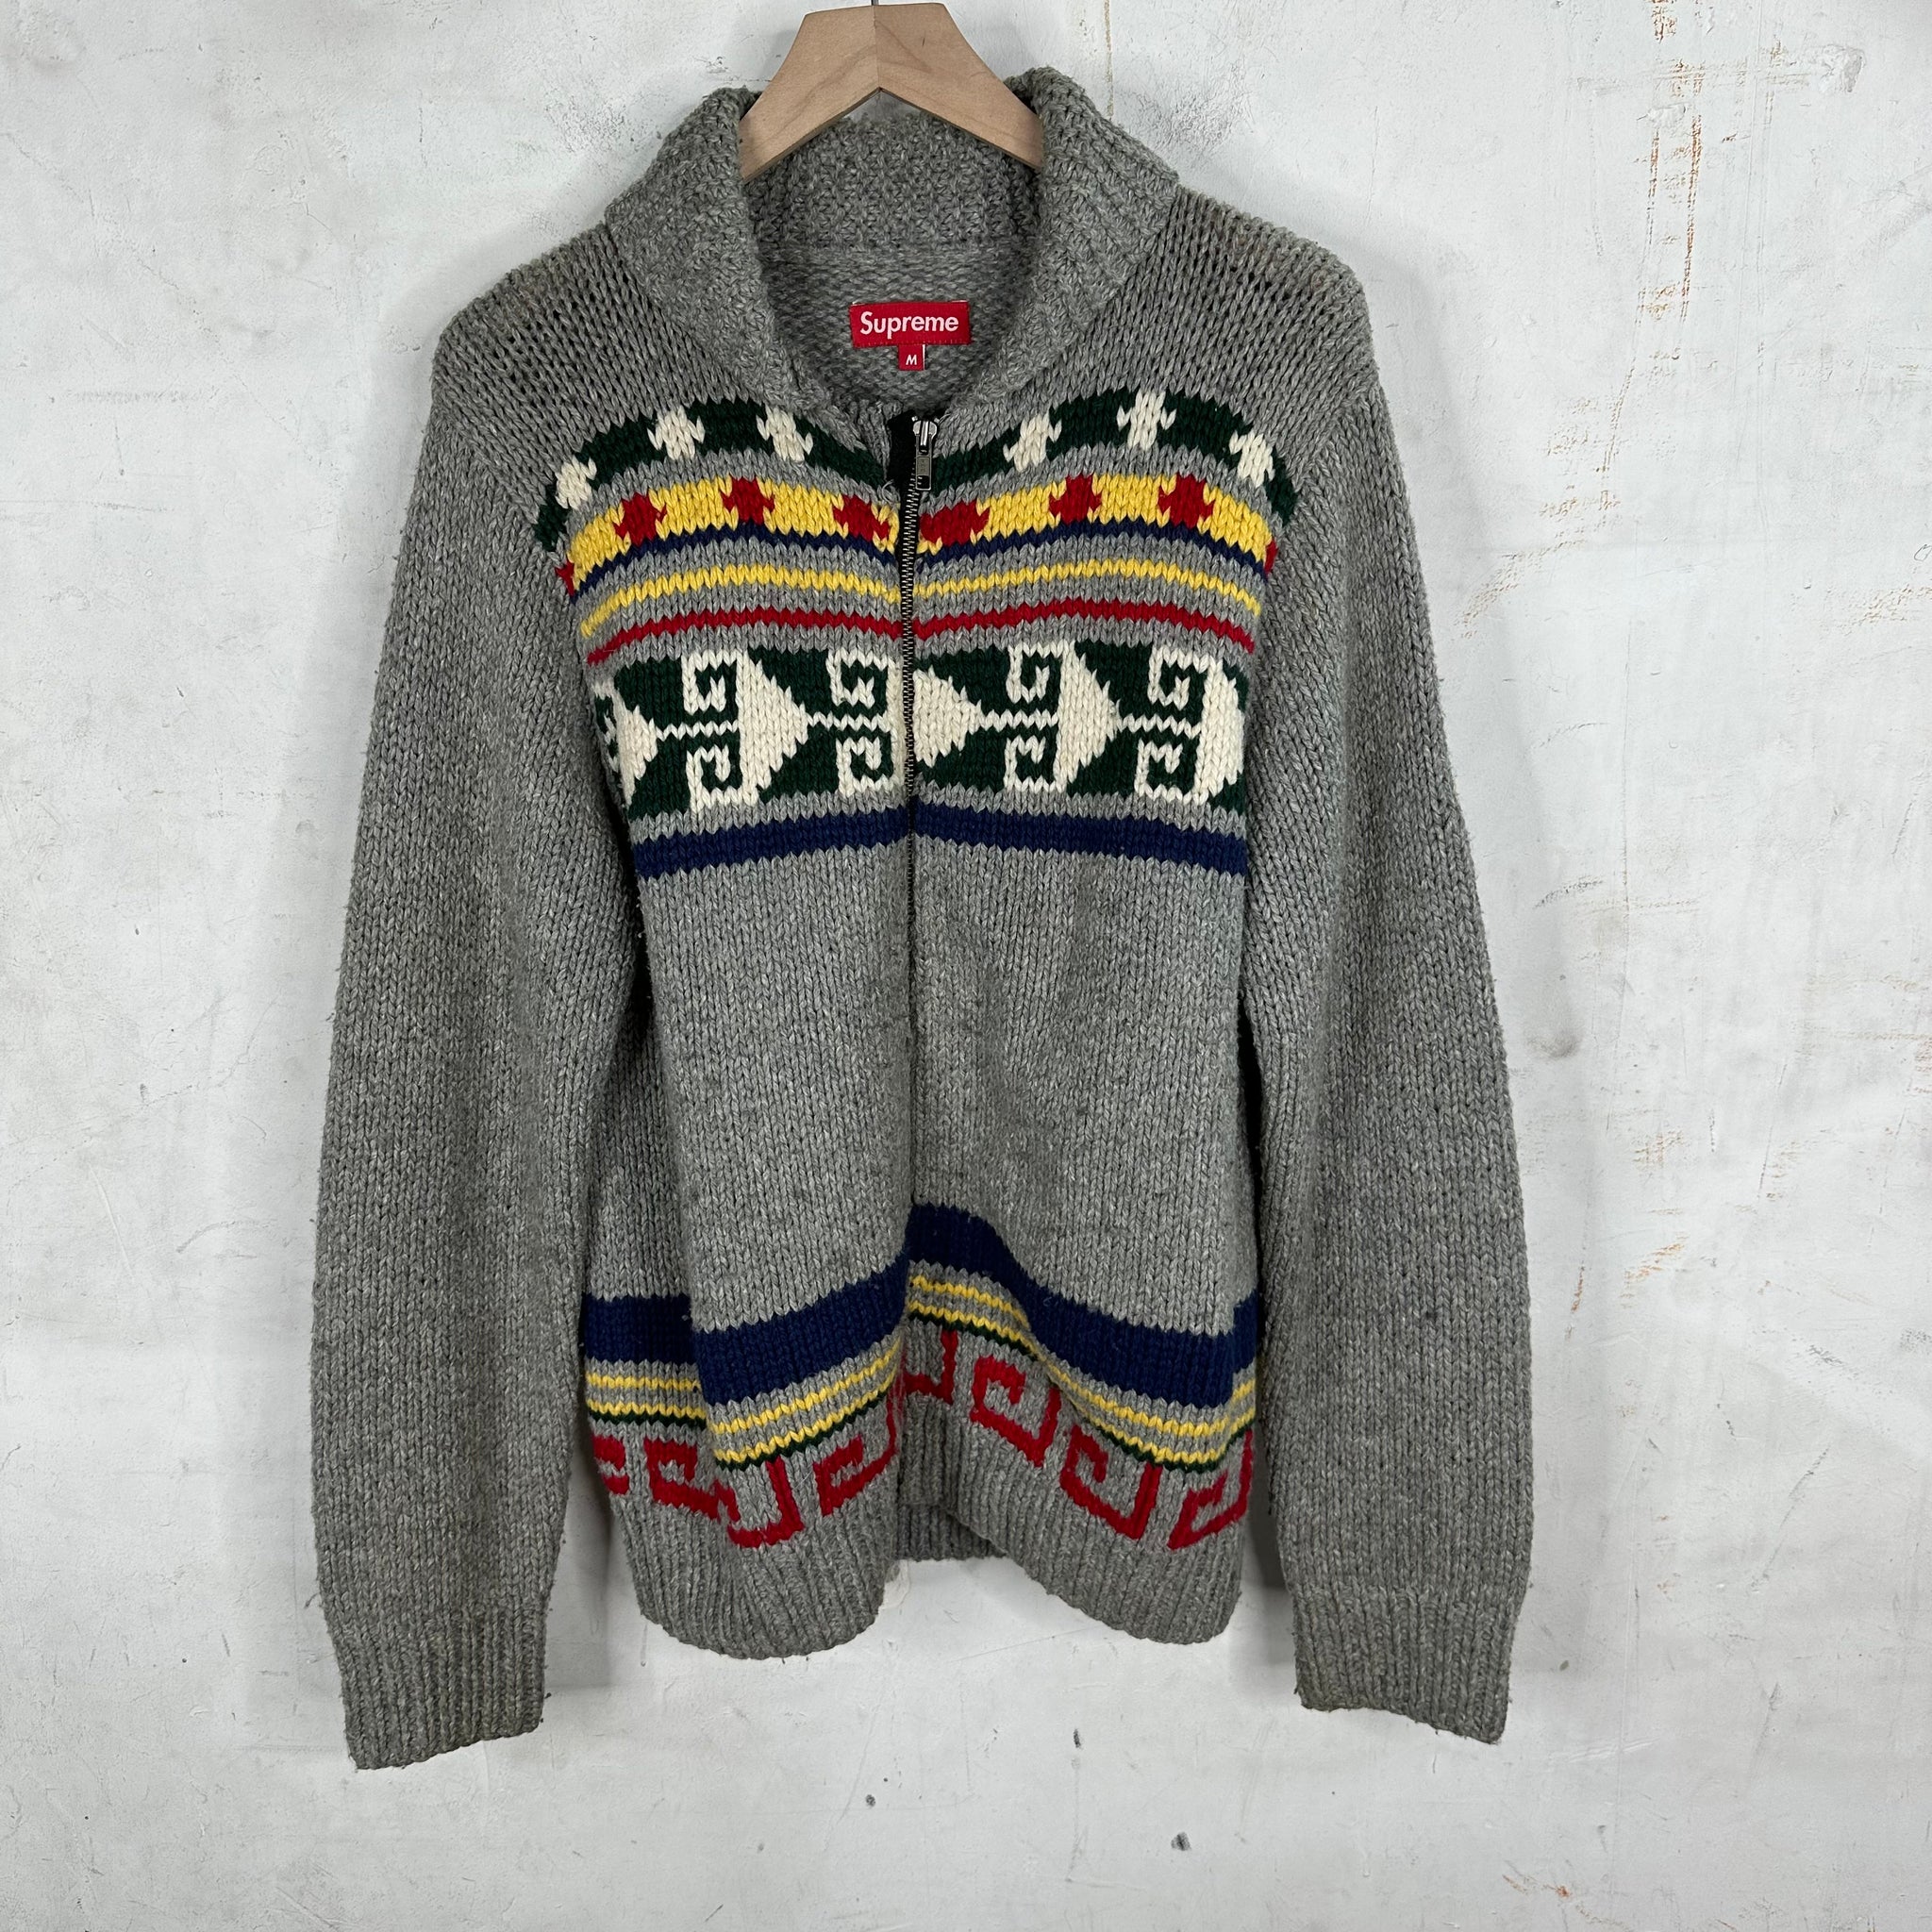 Supreme Wool Knit Zip Sweater